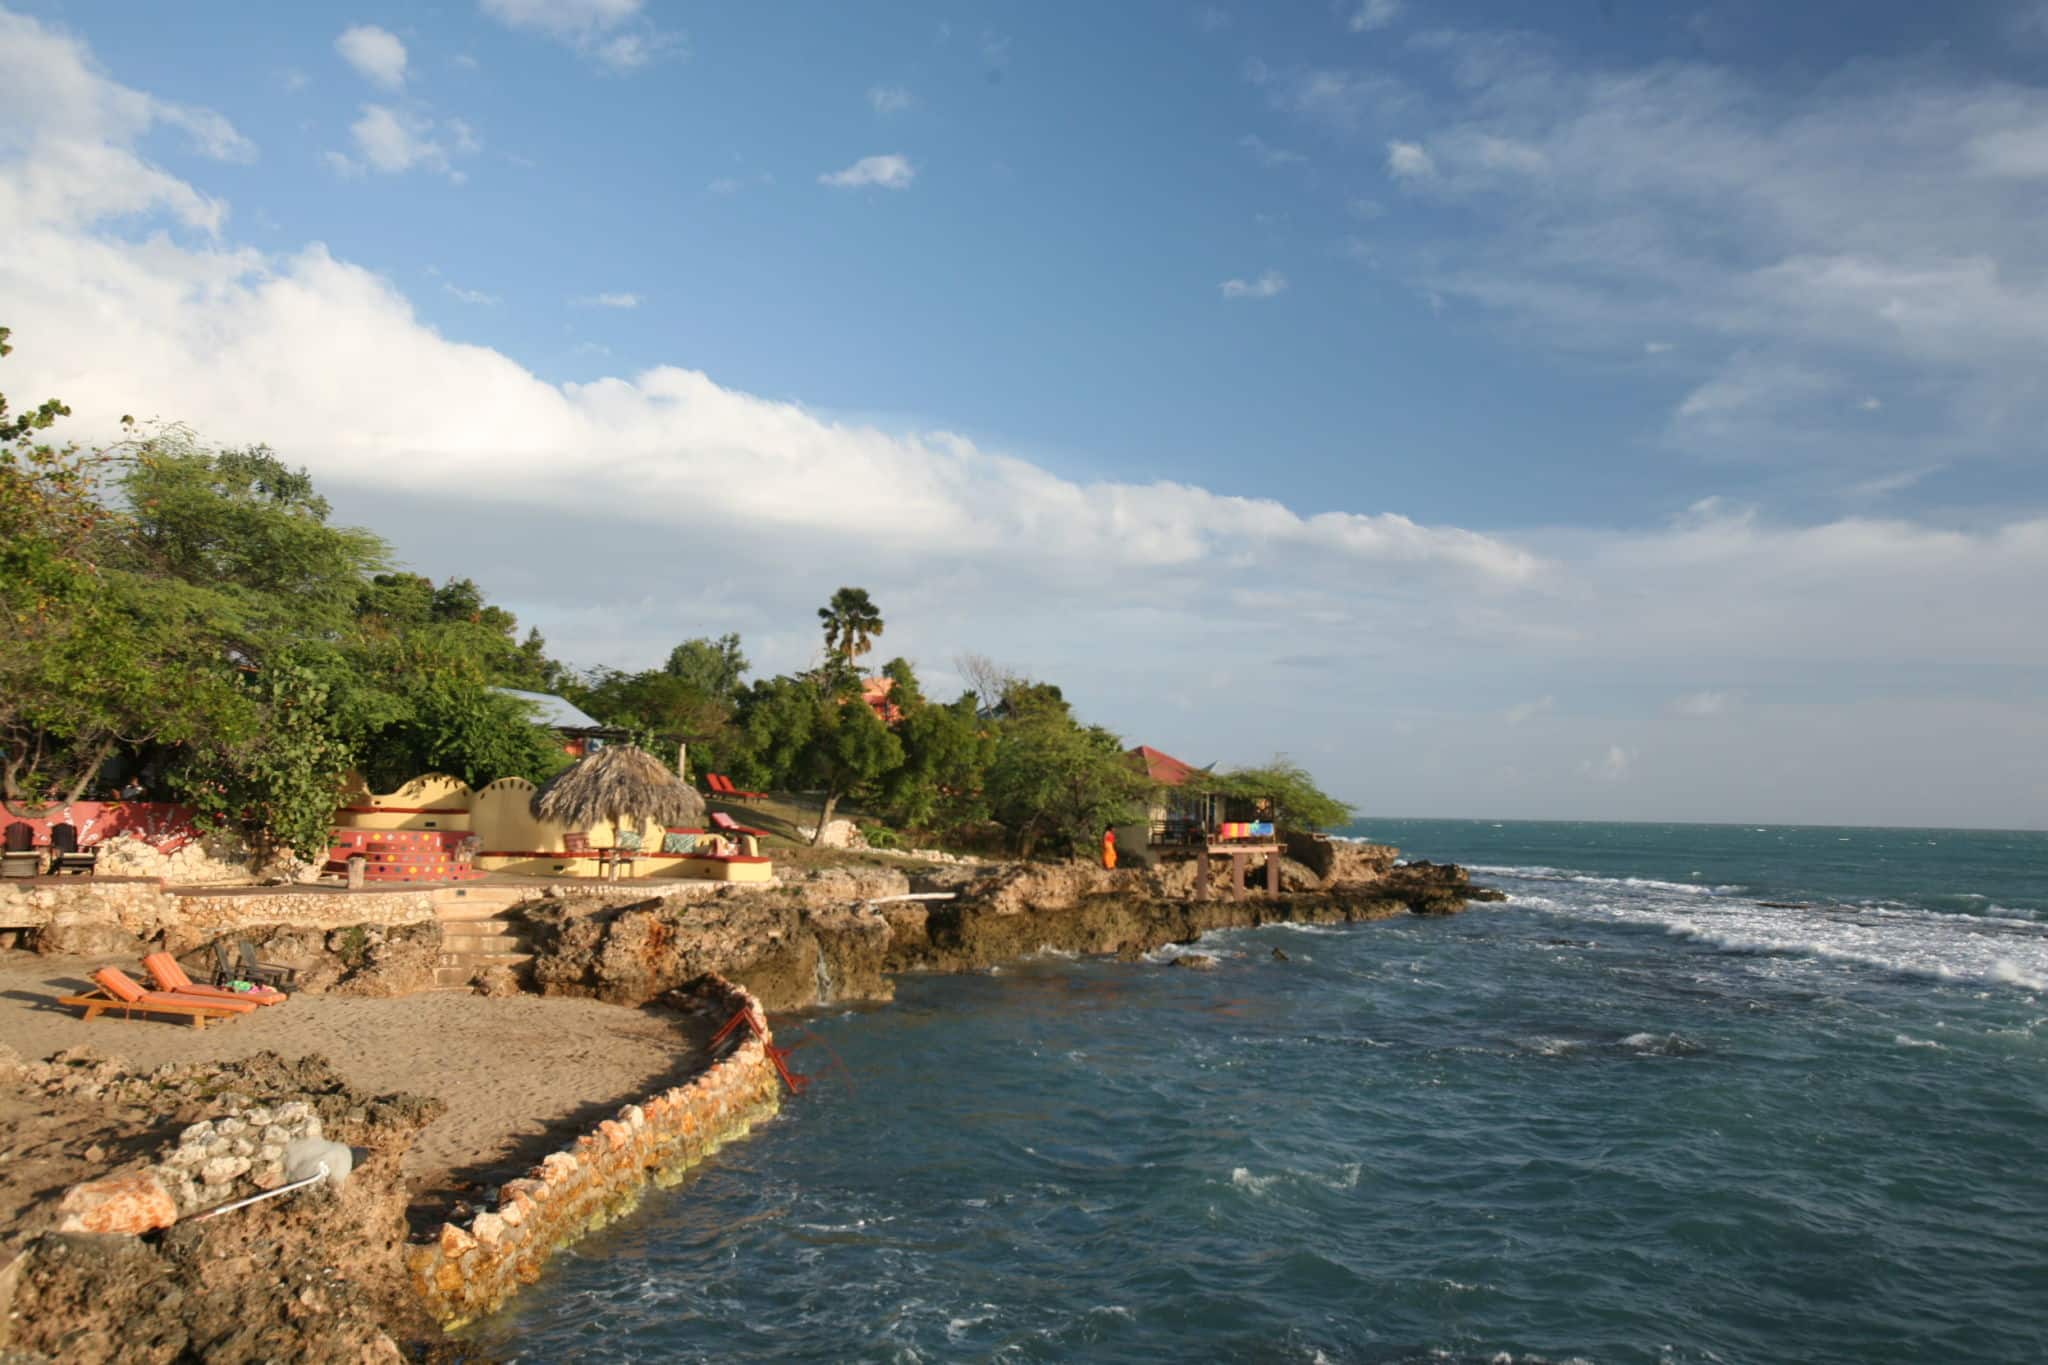 oceanside resort in Montego Bay, Jamaica